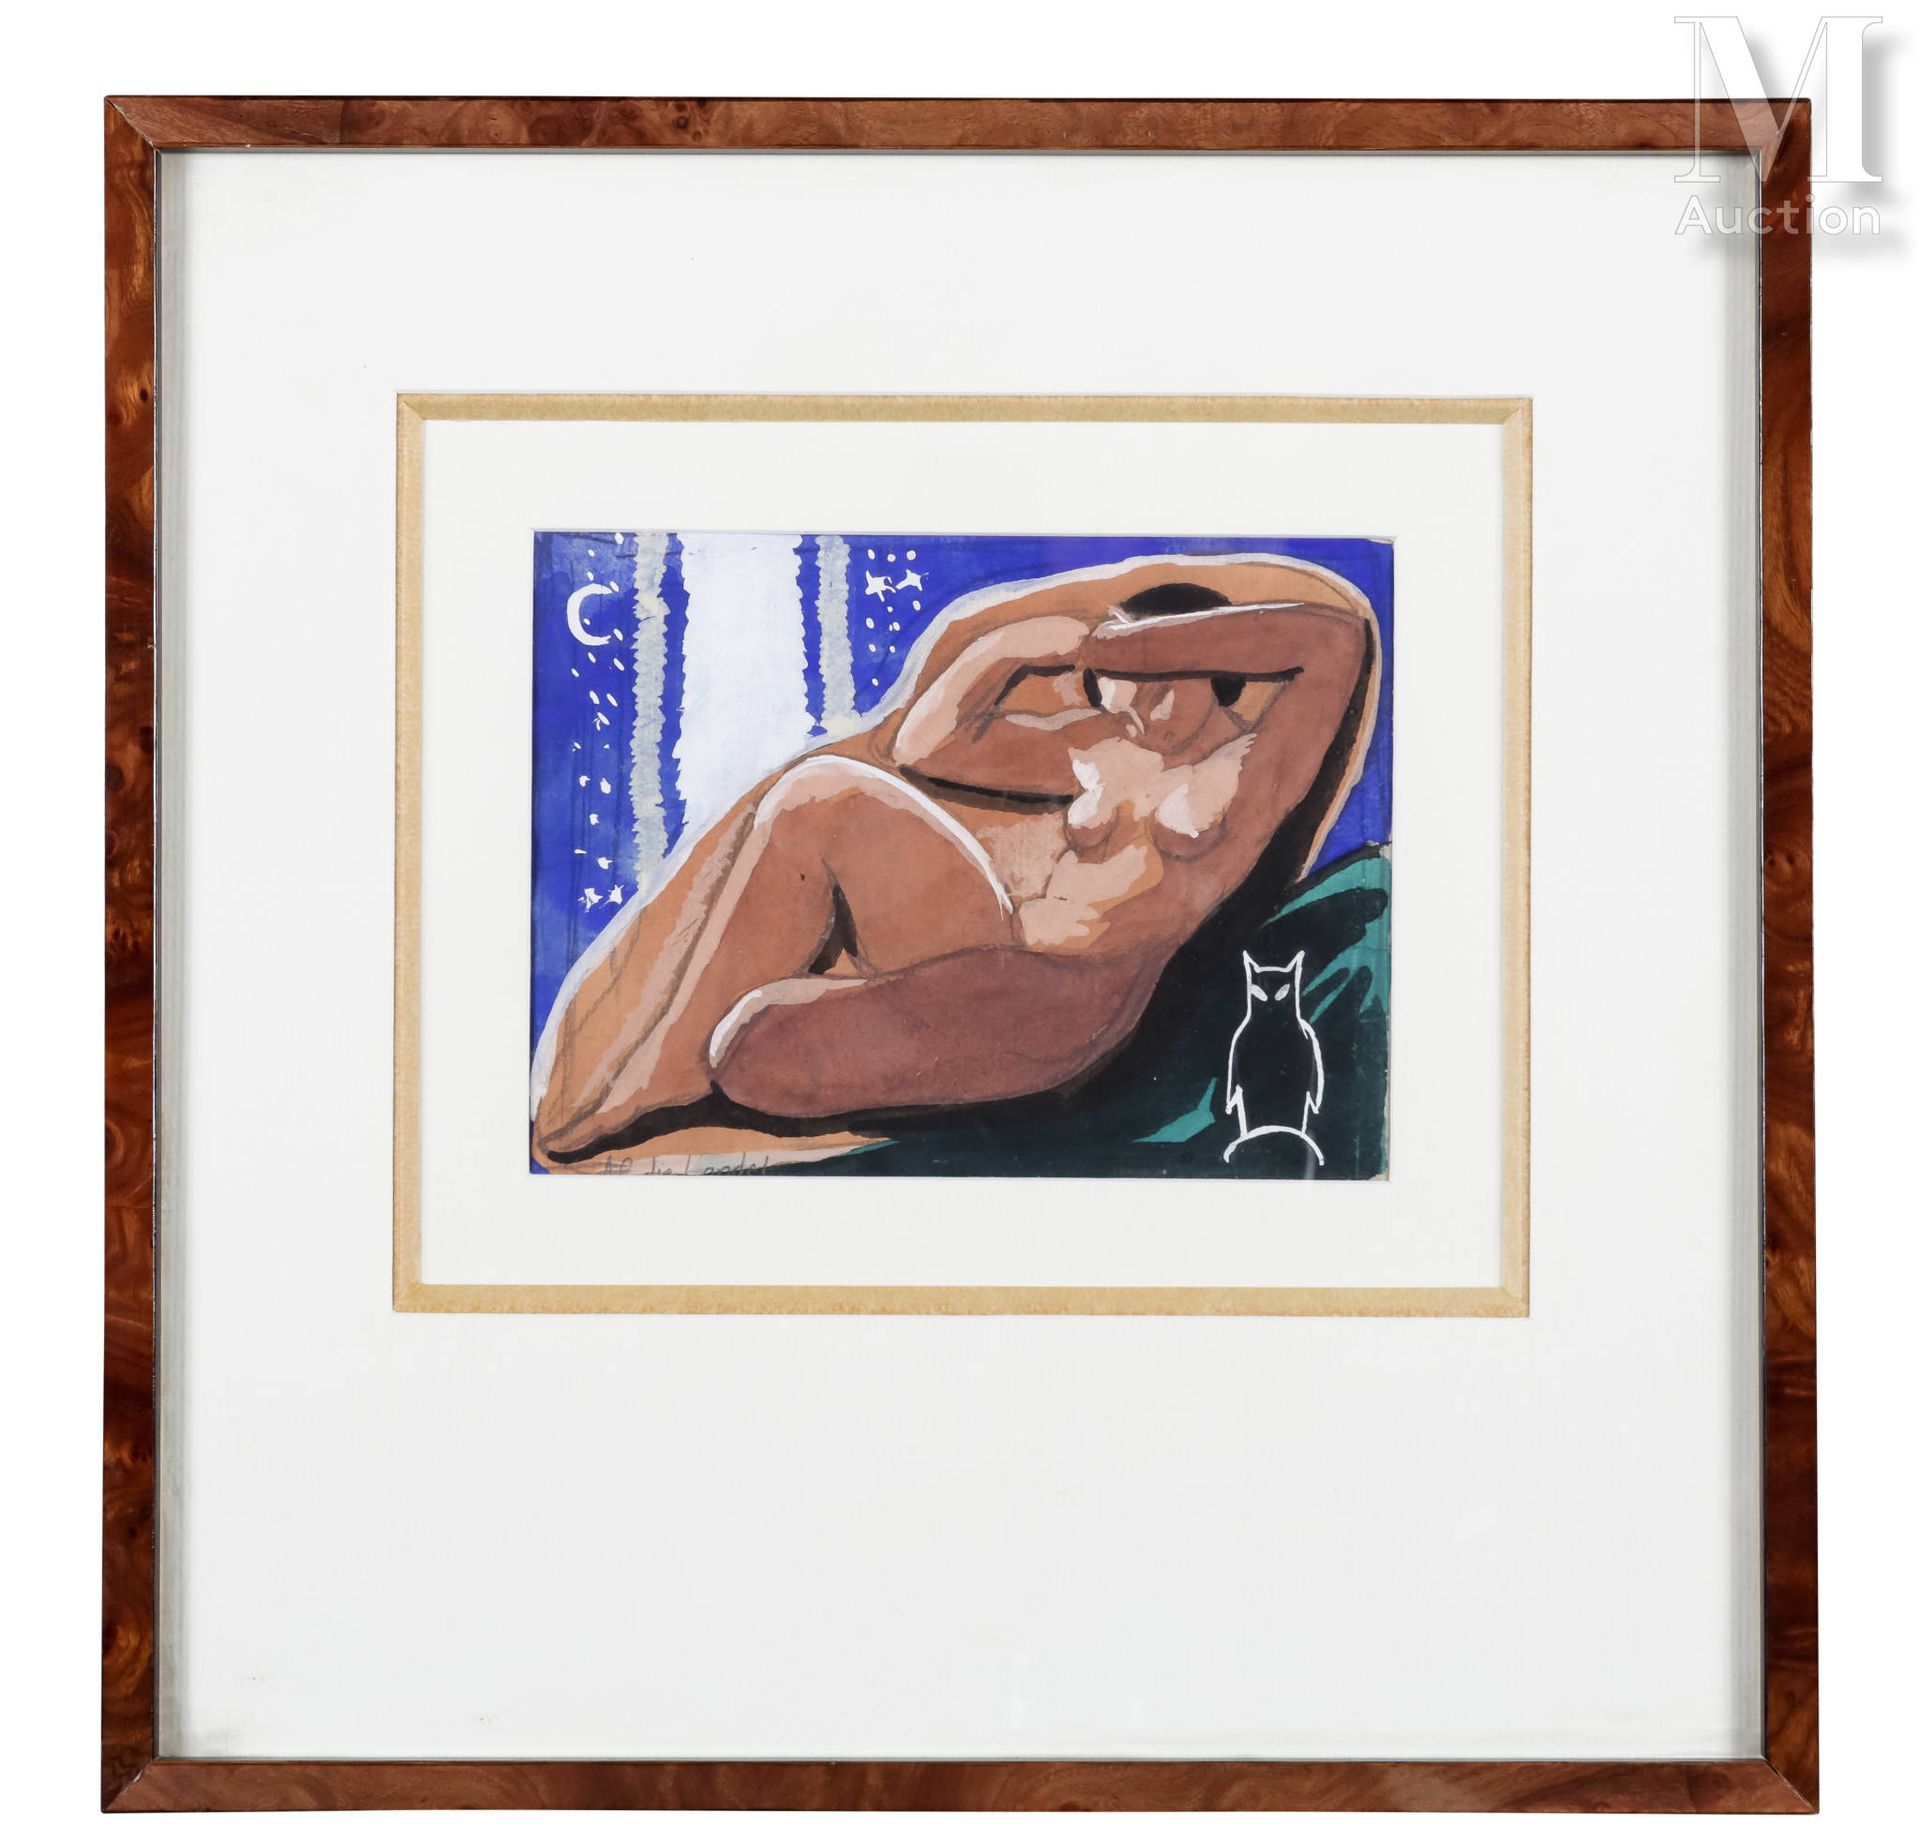 Pierre ABADIE-LANDEL (1896-1972) 裸体坐姿



纸上水彩和铅笔

11.8 x 16 cm

签名左下：阿巴迪-兰德尔